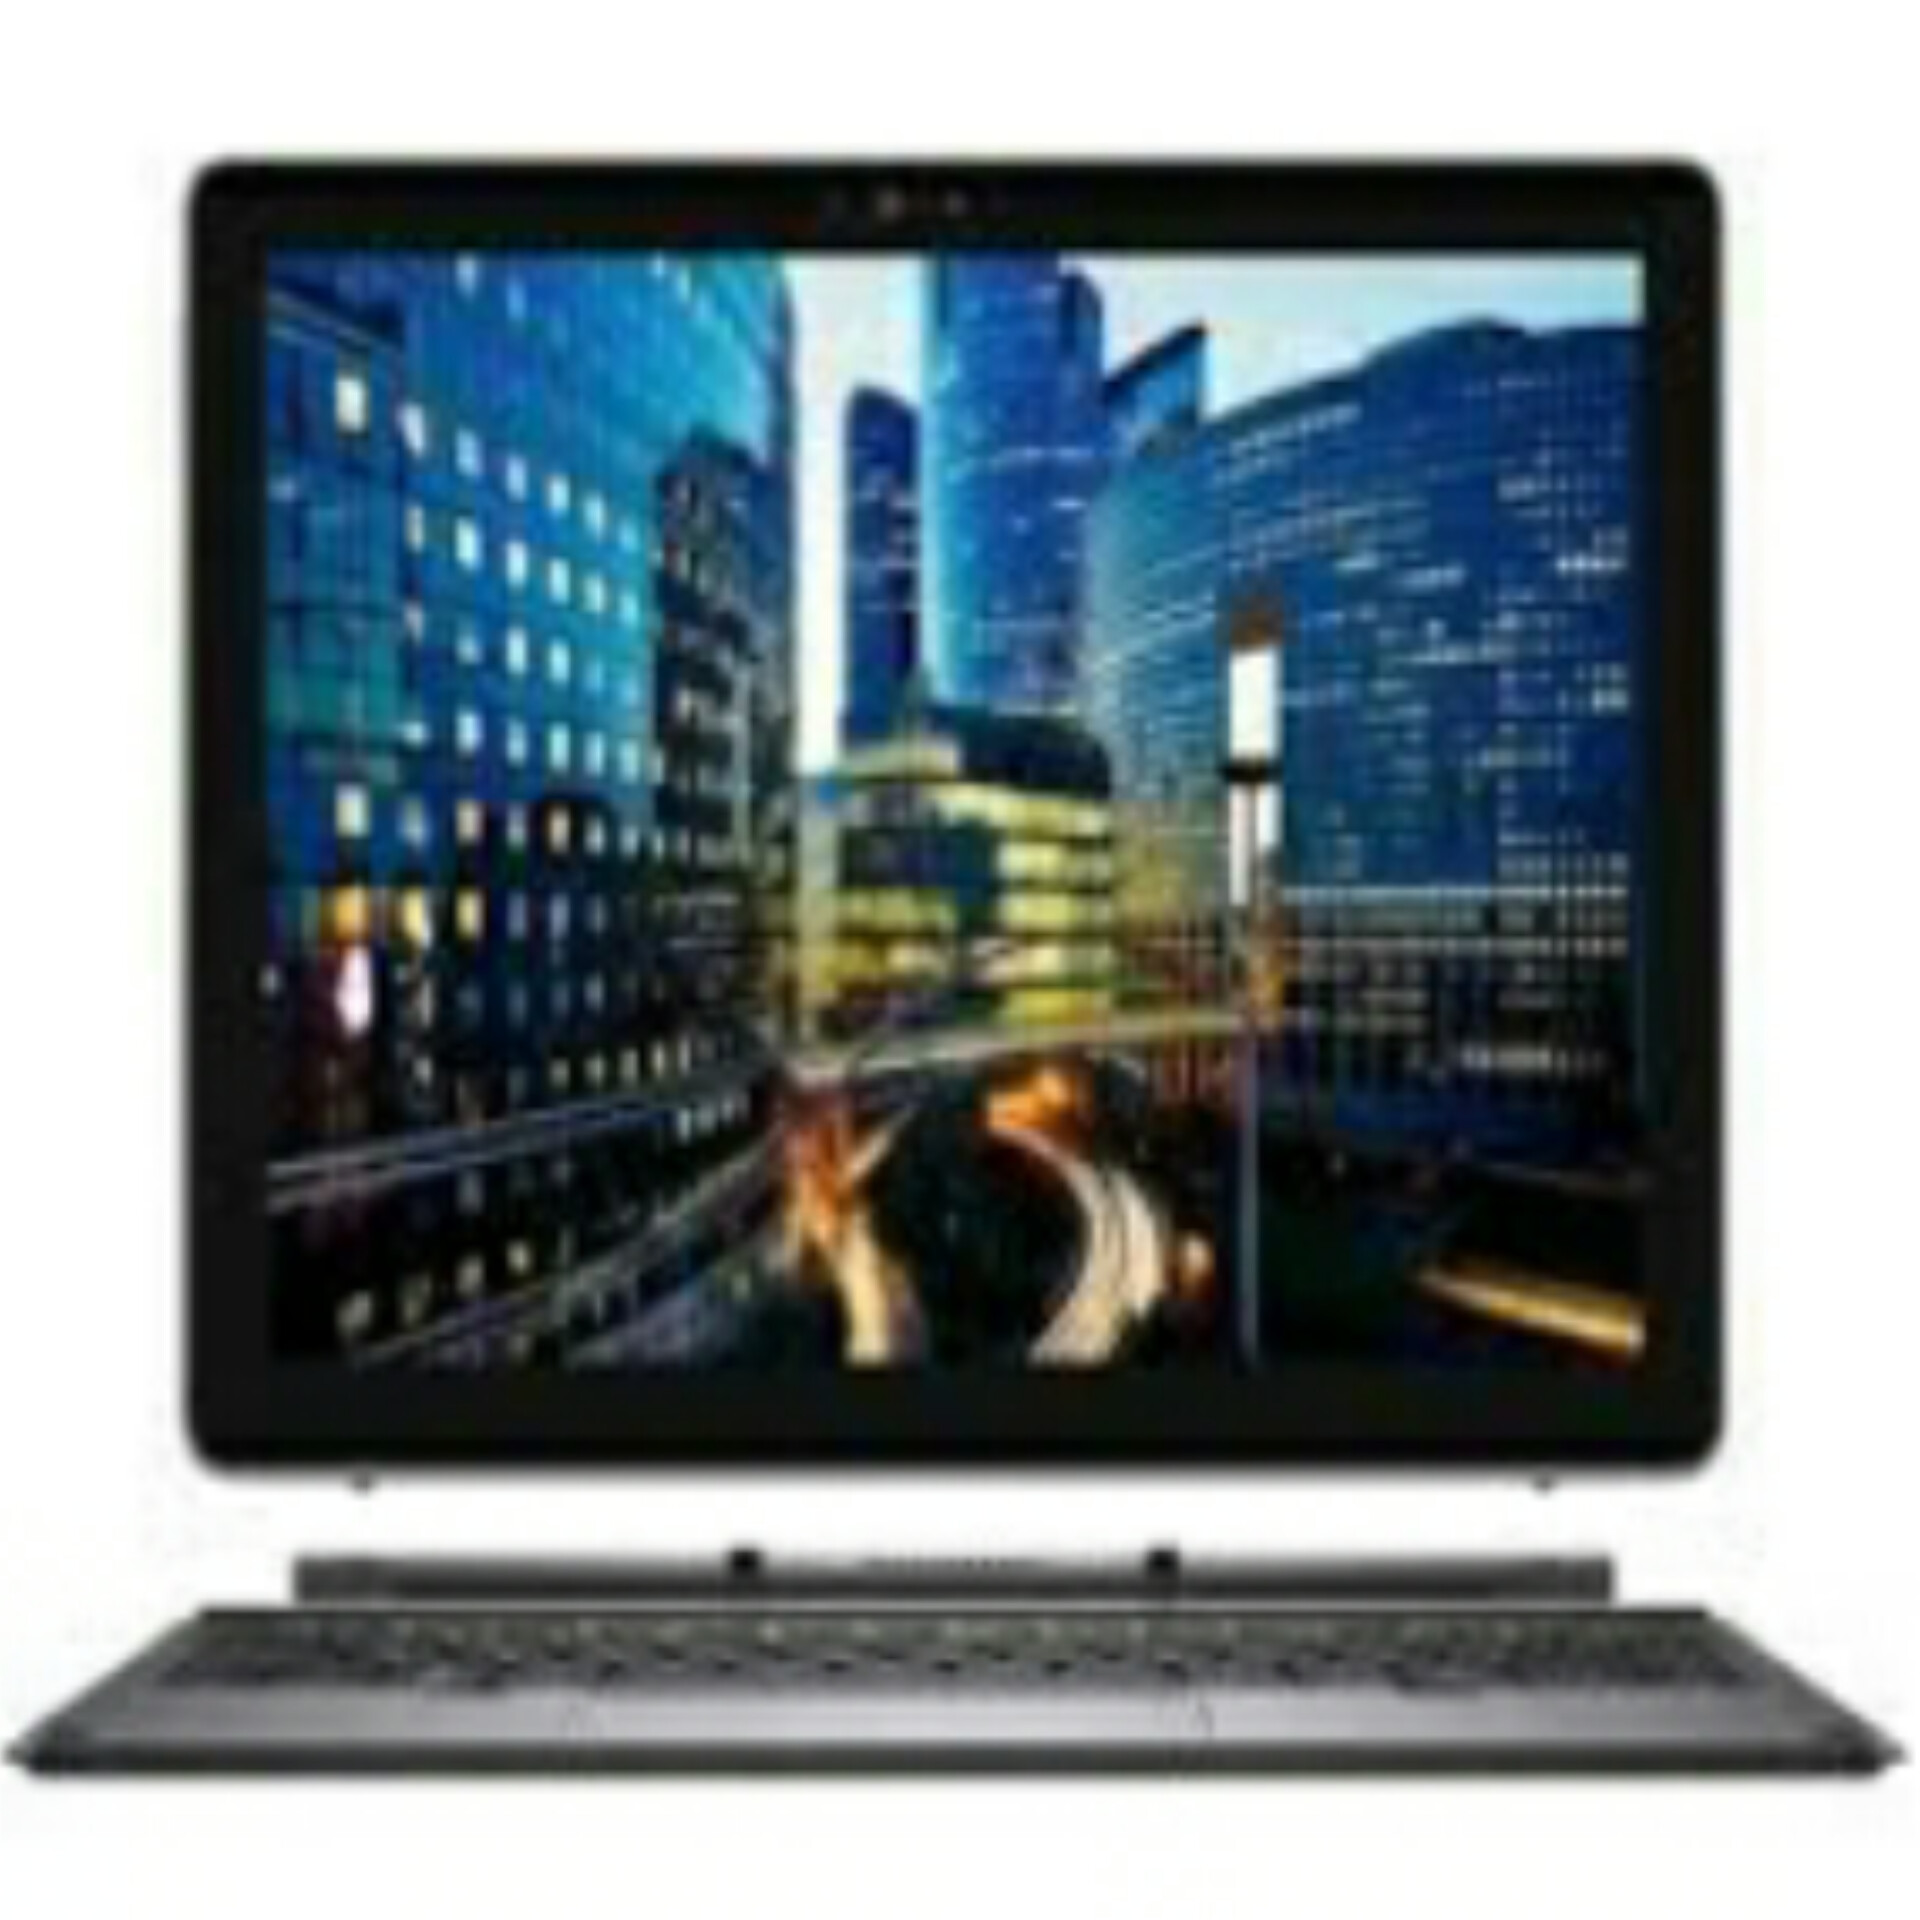 Dell Latitude 7200 2 in 1 Laptop Price in Pakistan